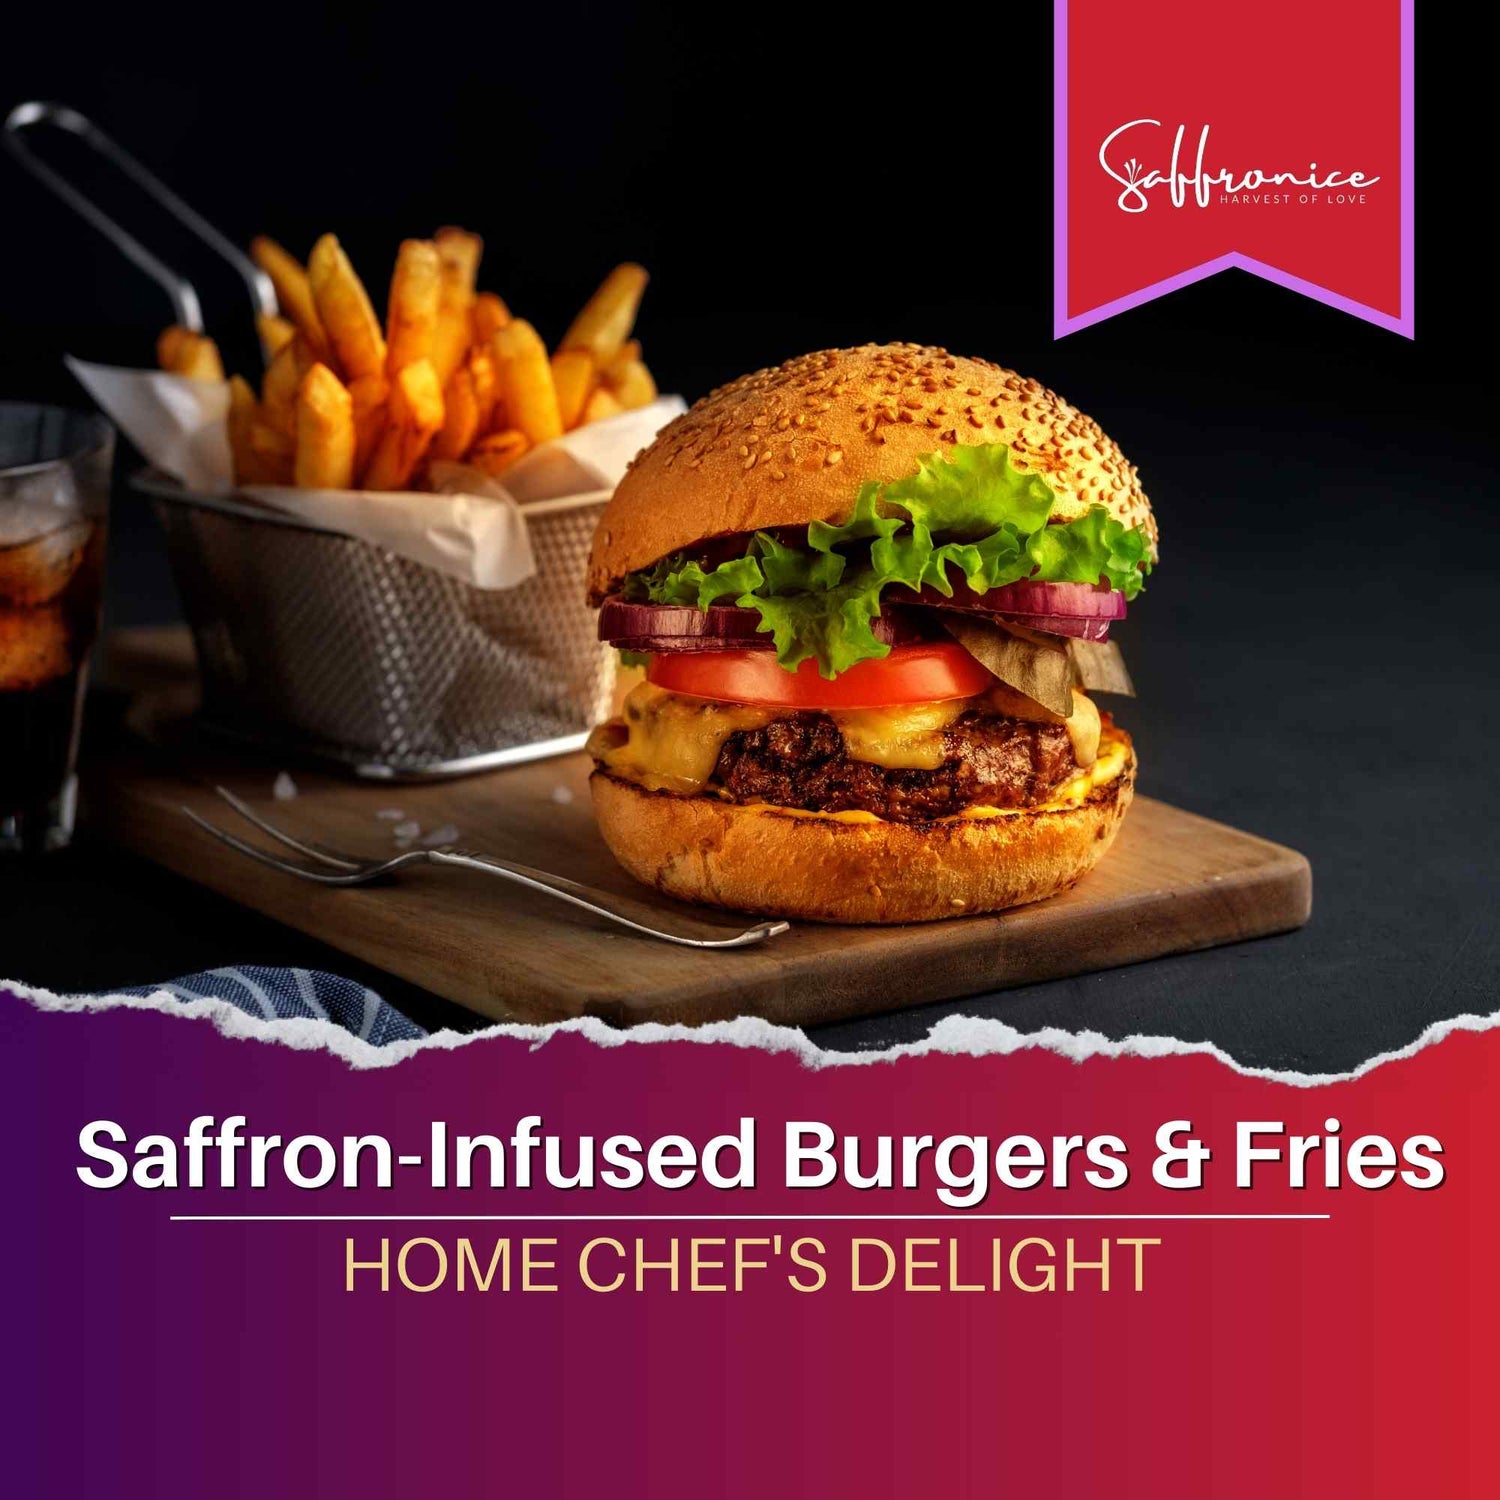 Saffron-Infused Burgers & Fries